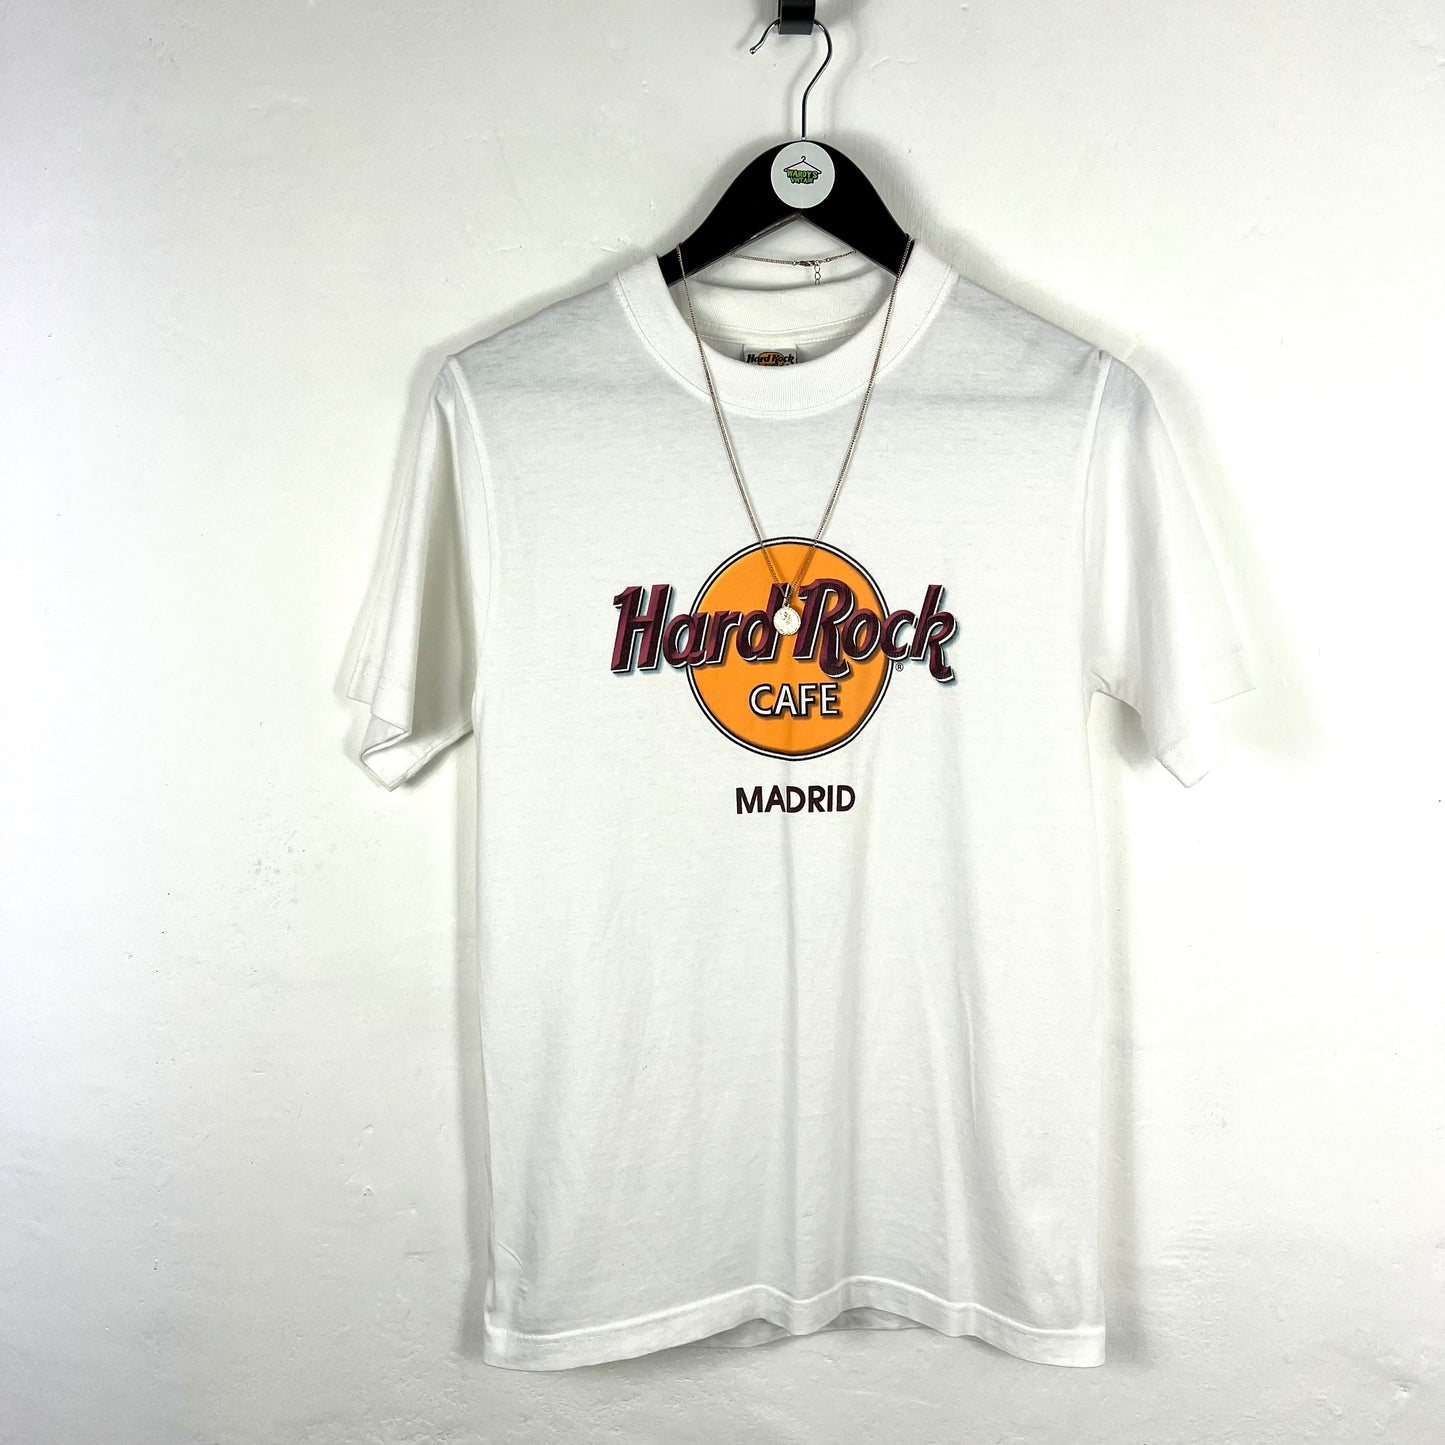 Hard Rock Cafe Madrid t shirt small